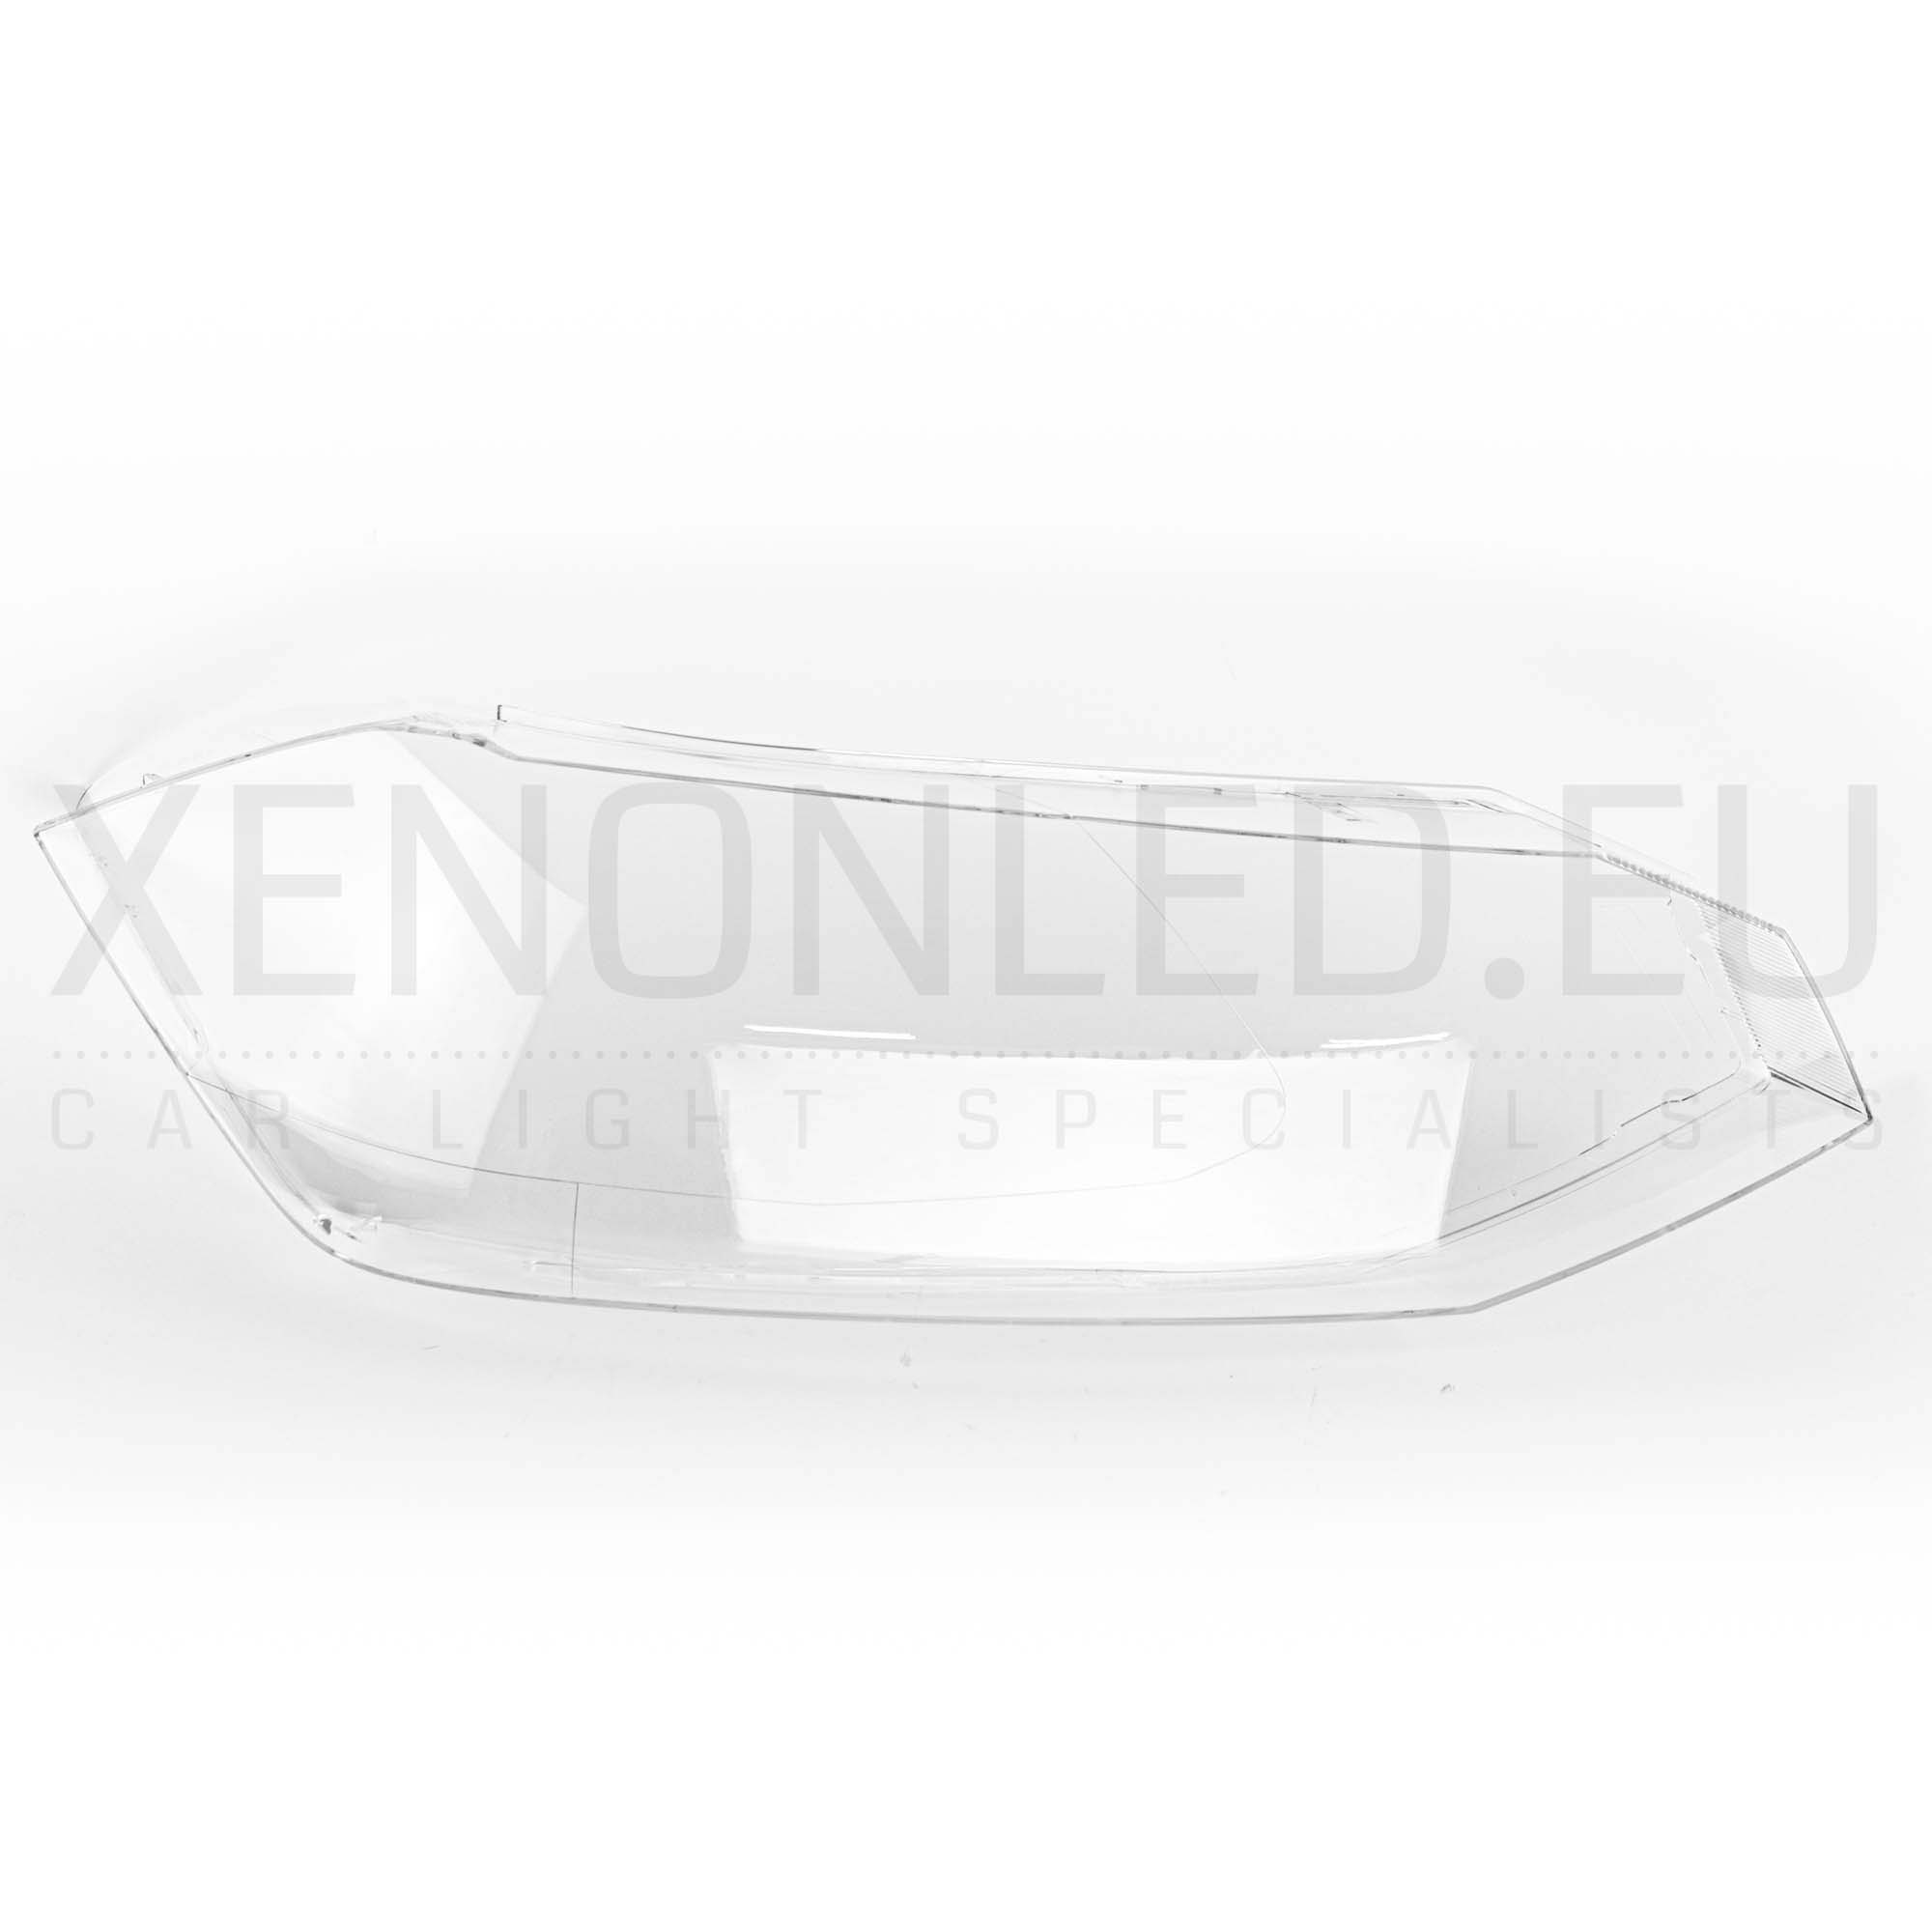 Volkswagen Polo 2017 - ... Headlight Lens Cover Right Side - Xenonled.eu